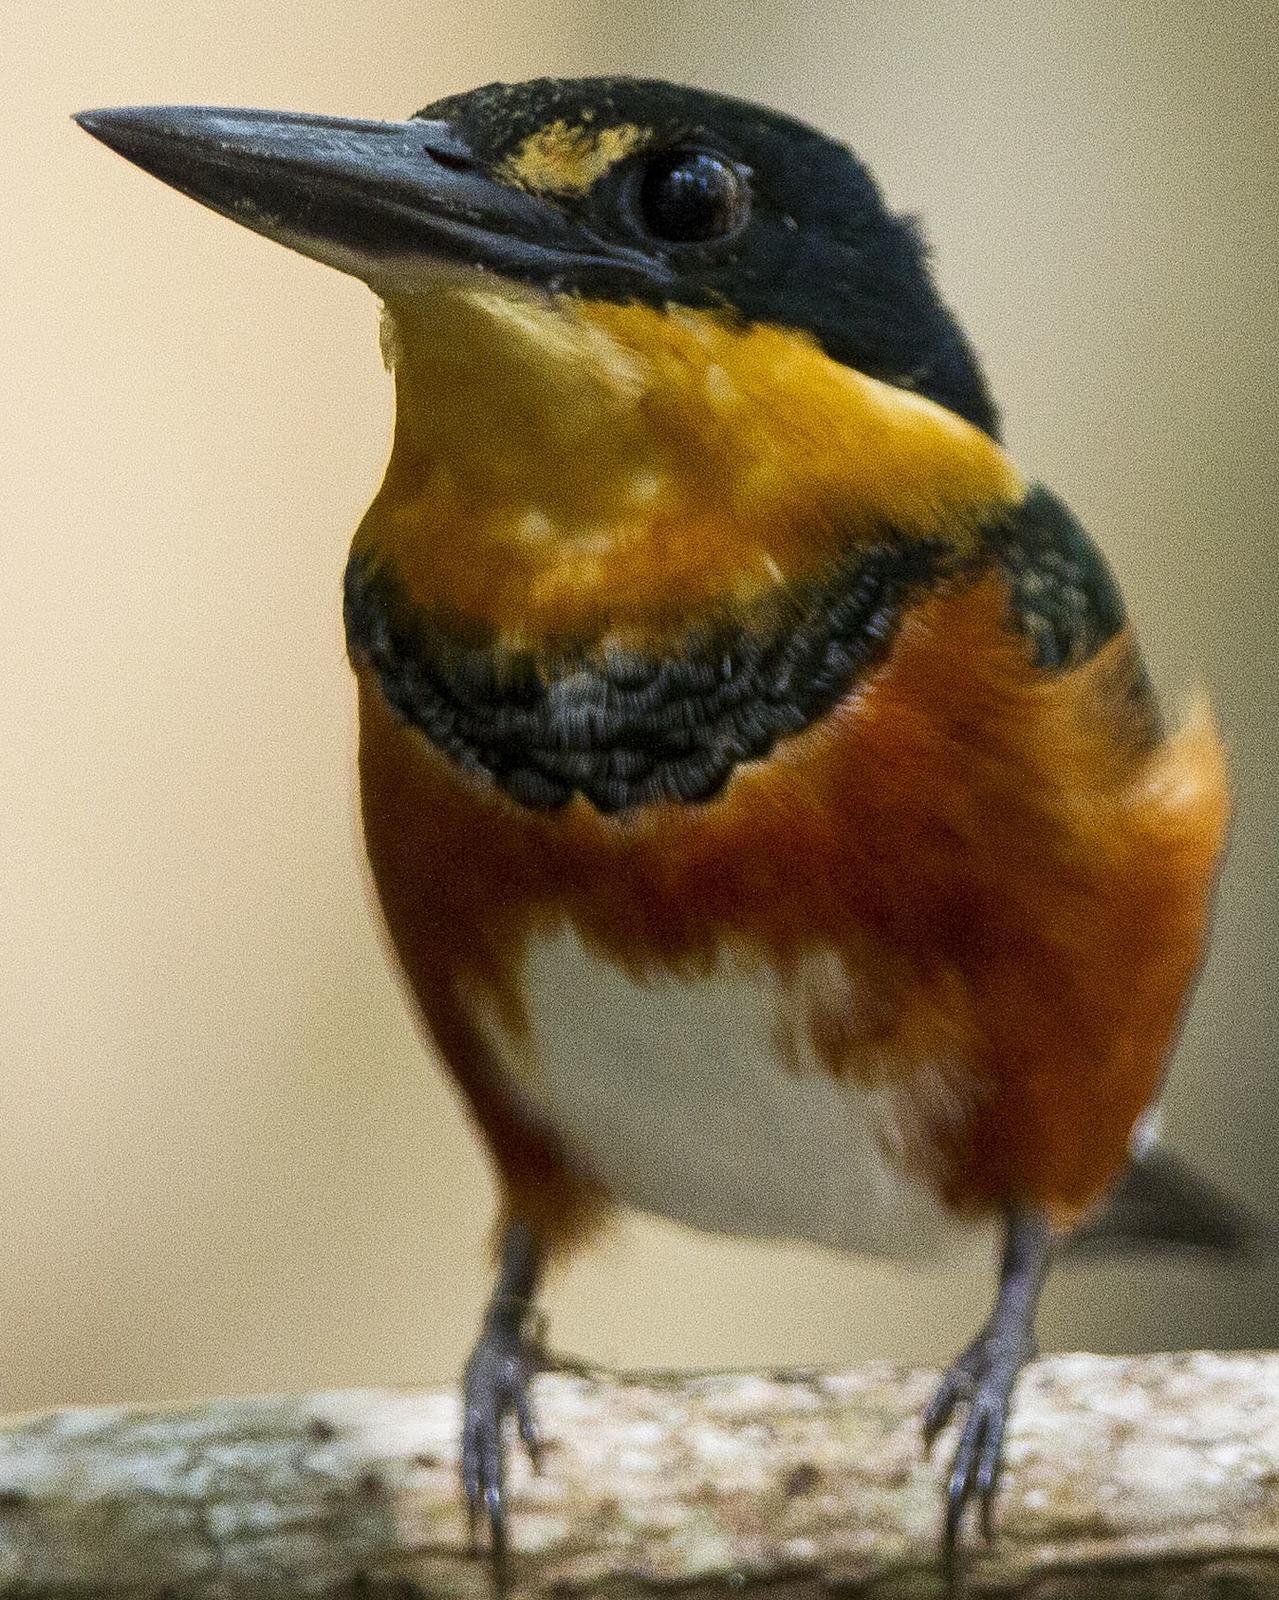 American Pygmy Kingfisher Photo by John Oates